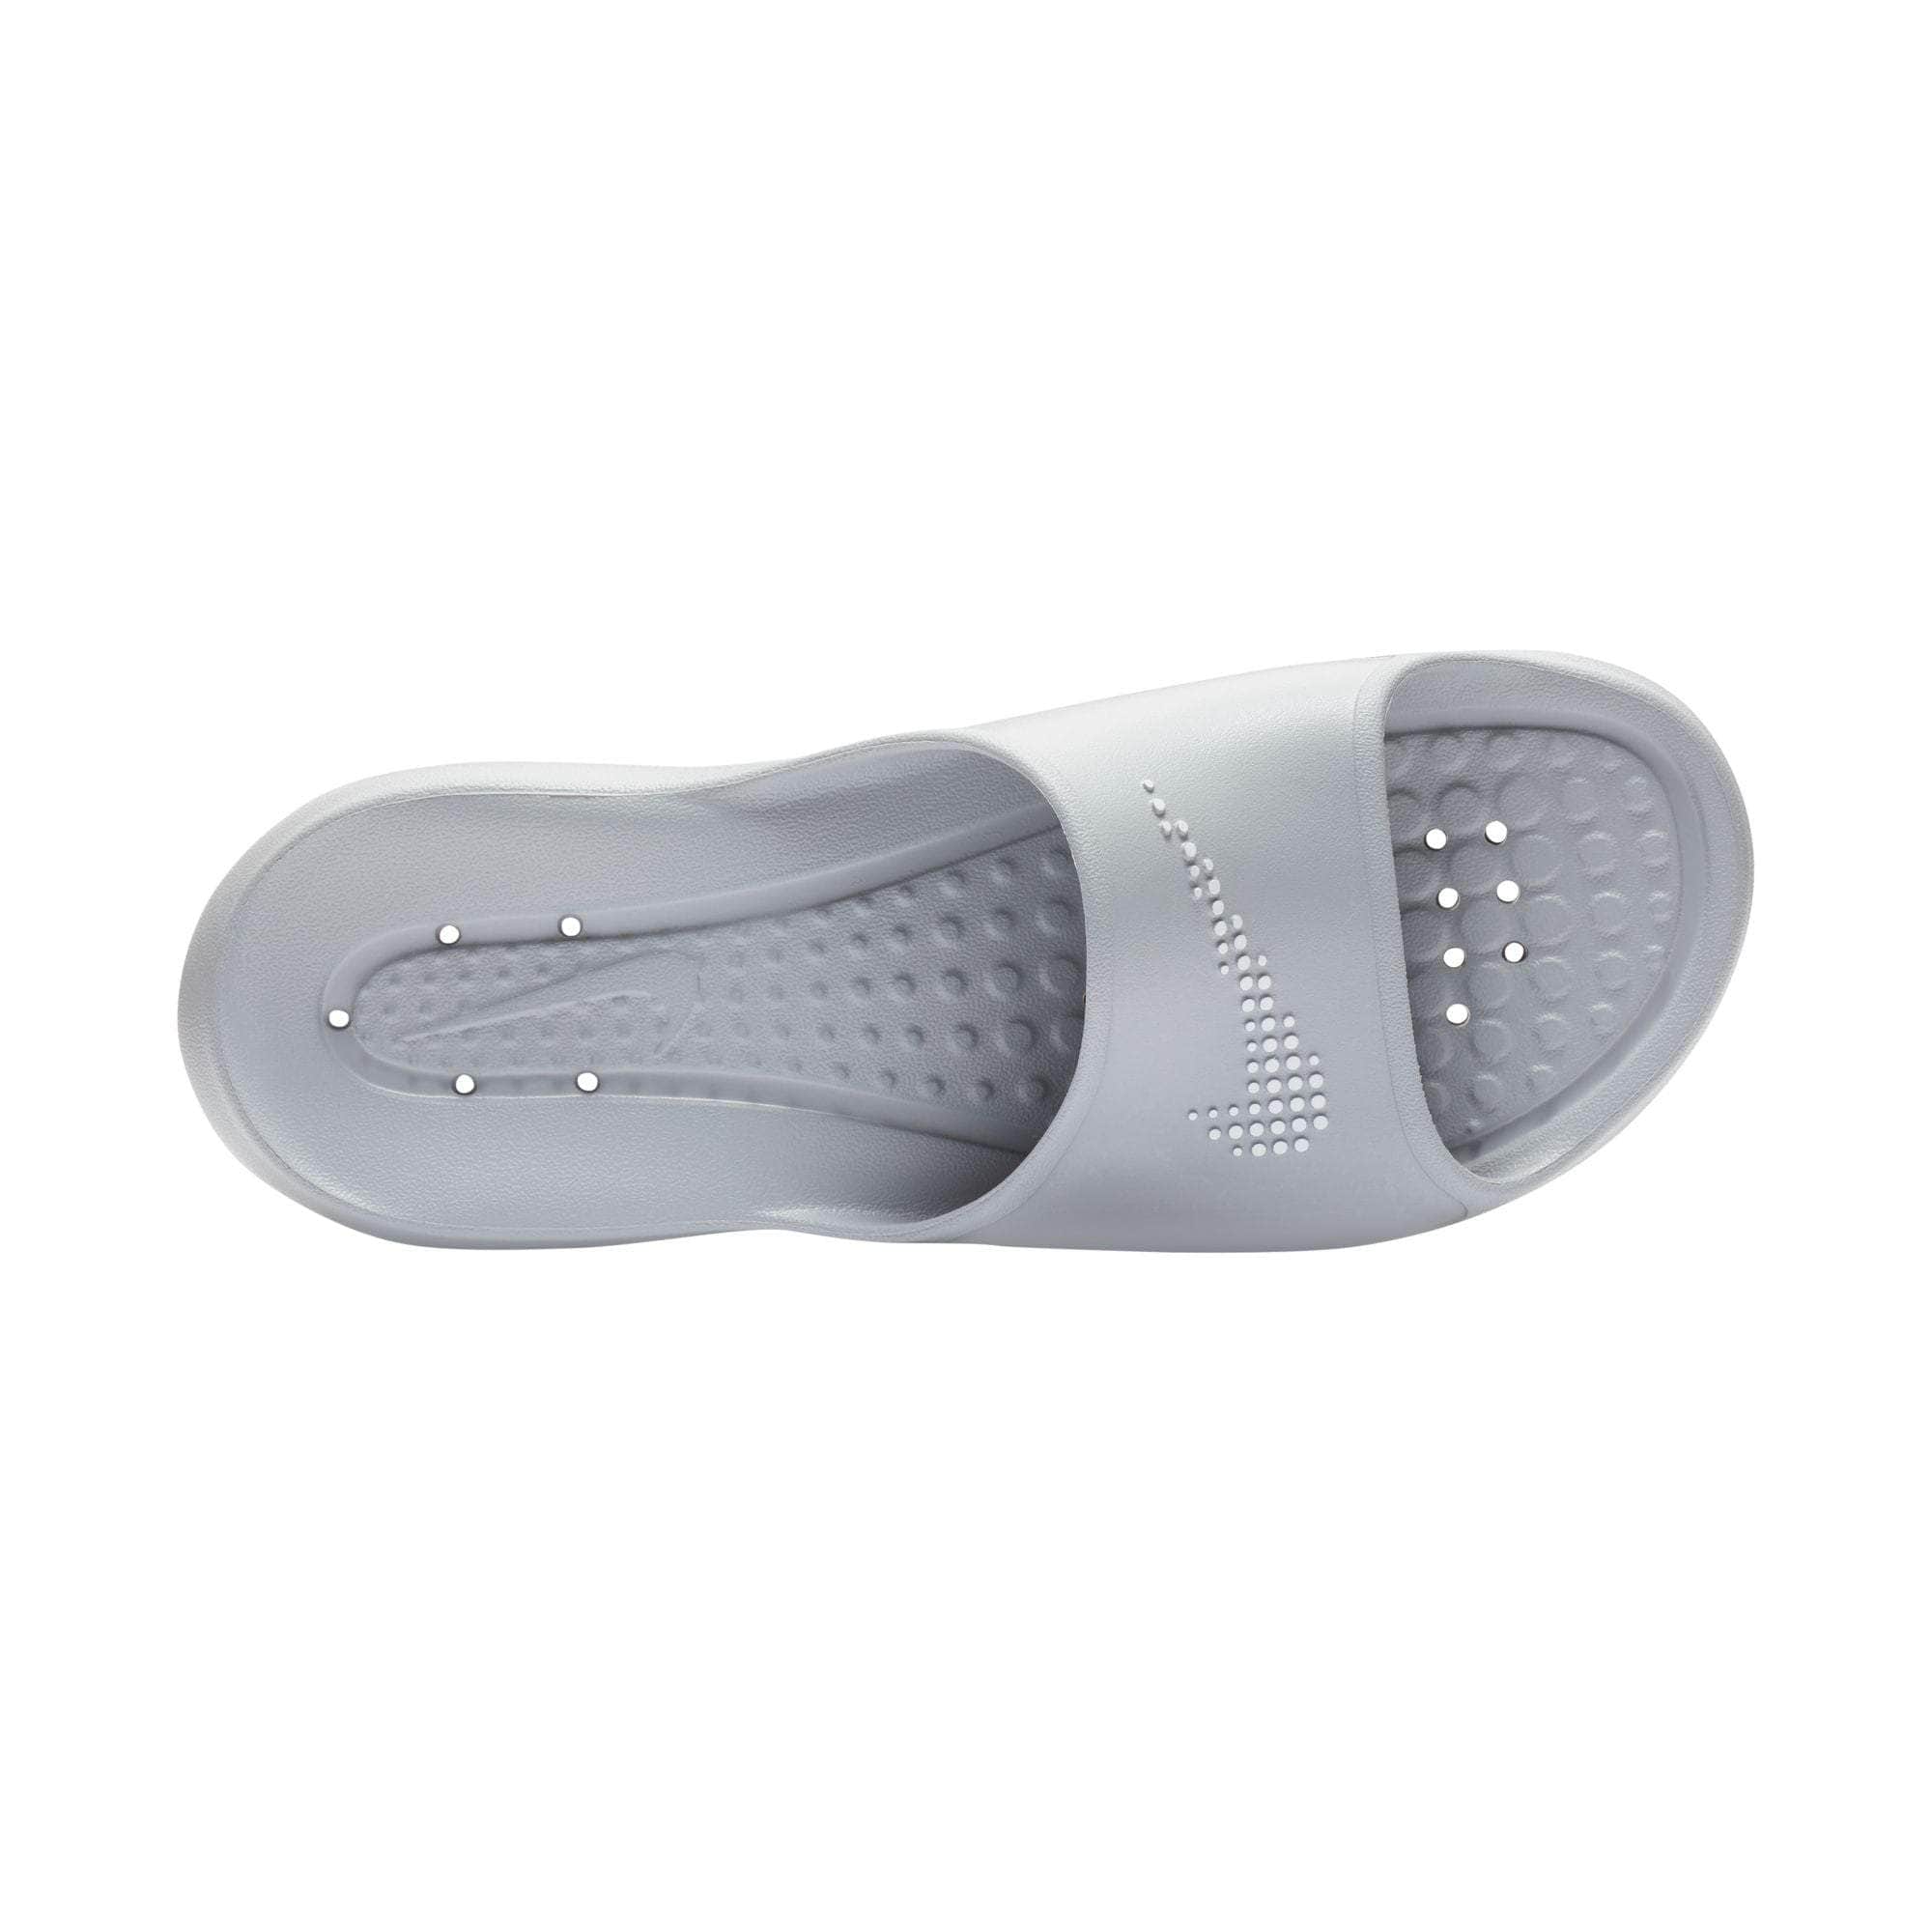 NIKE FOOTWEAR Products Nike Victori One Slides - Men's